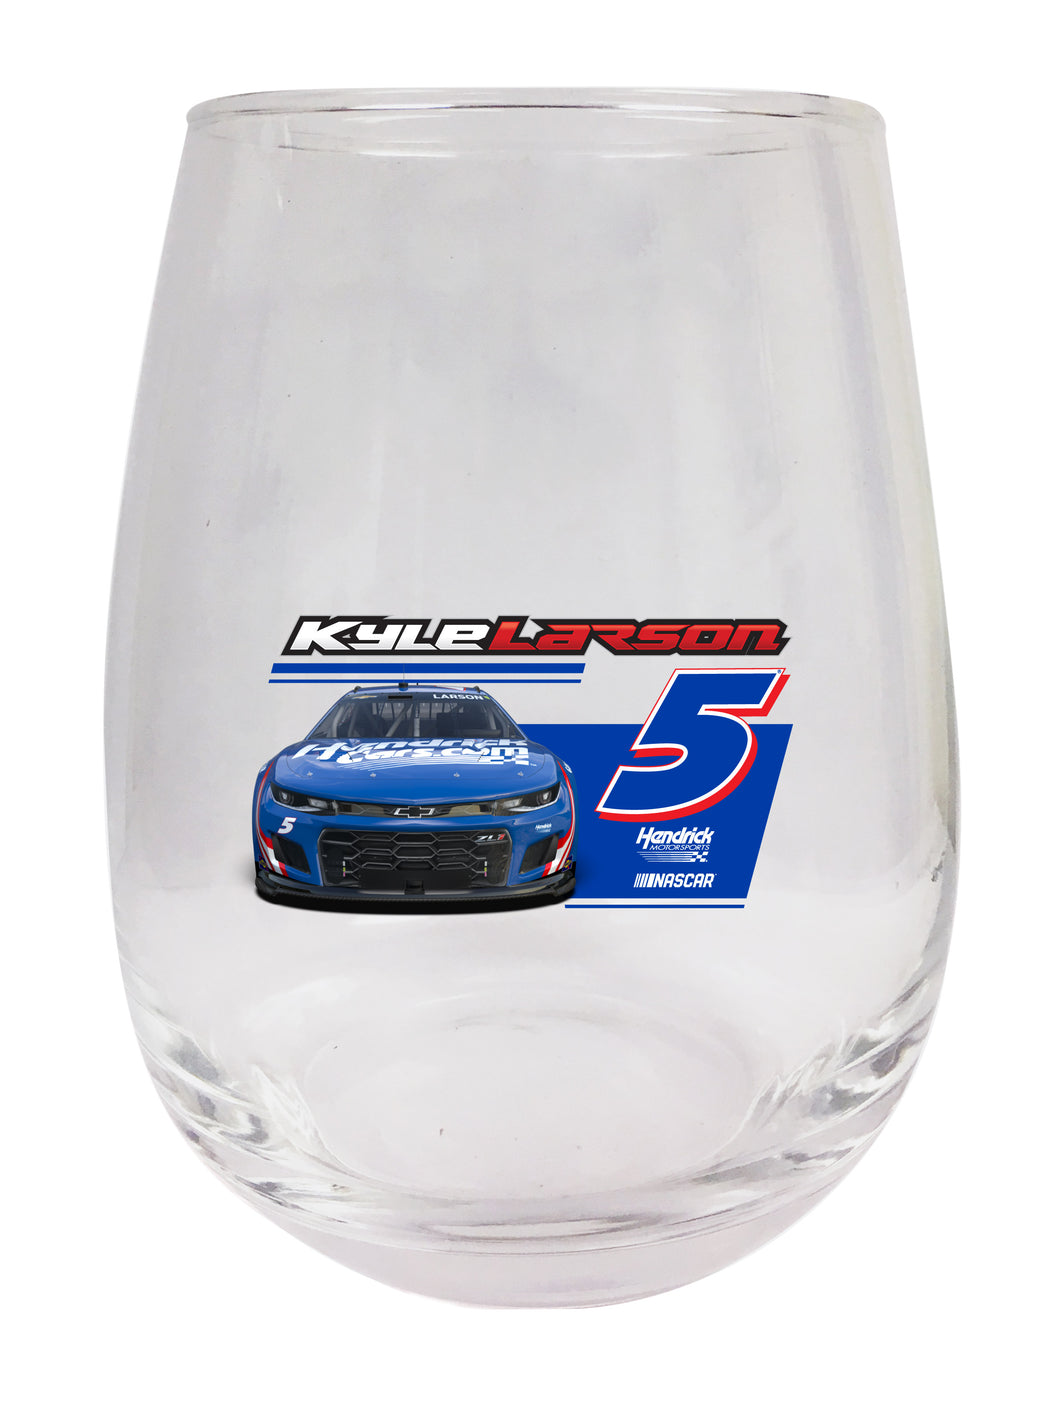 #5 Kyle Larson NASCAR Officially Licensed Stemless Wine Glass